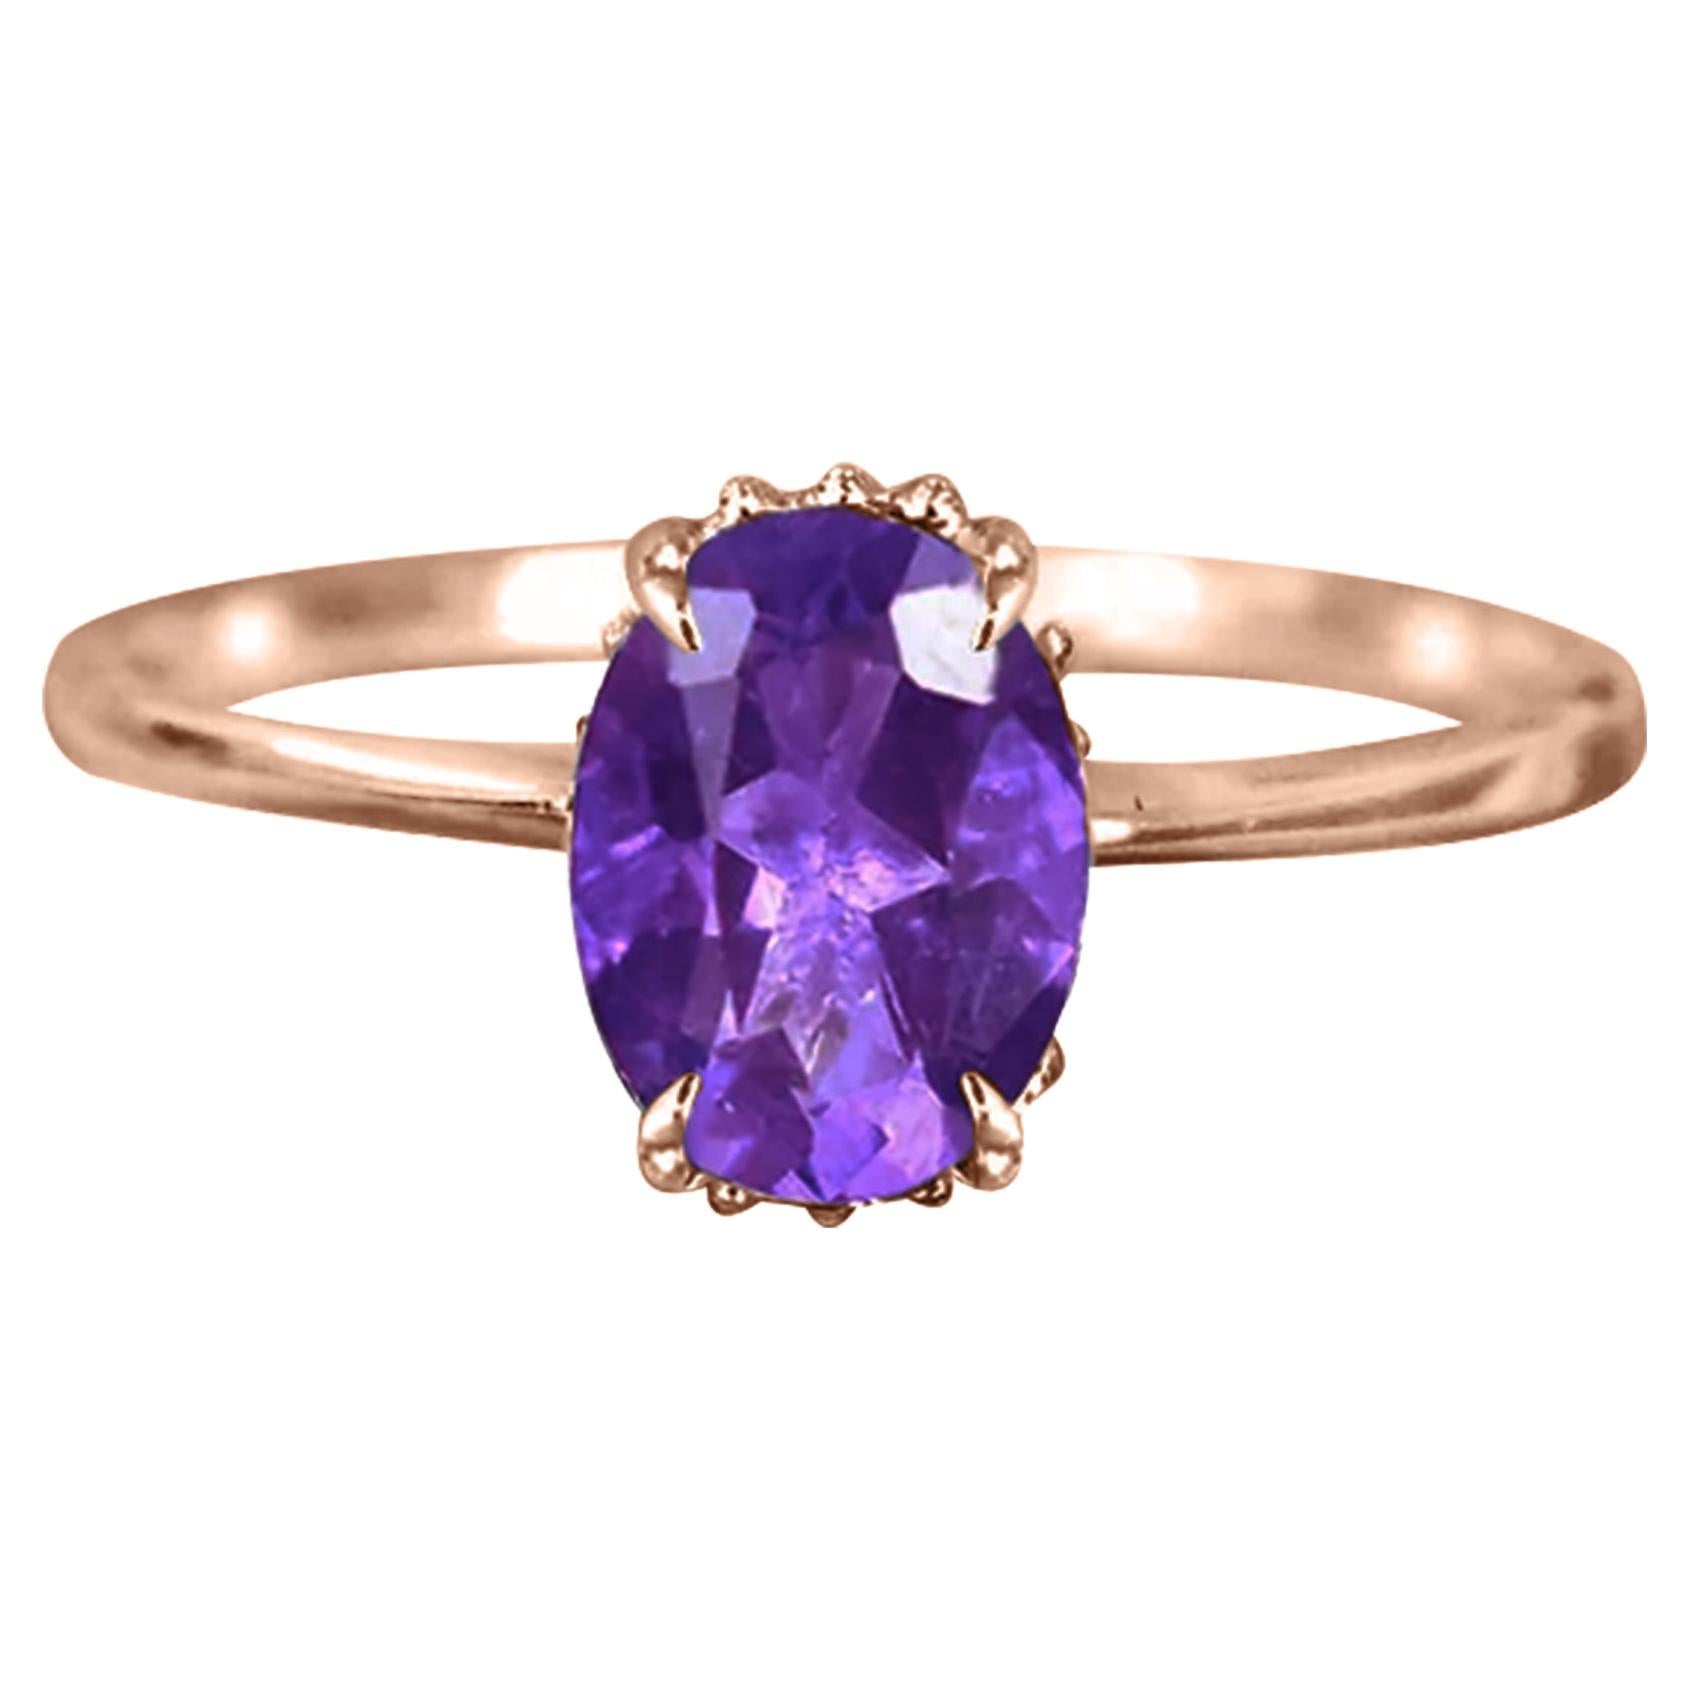 For Sale:  14k Gold Oval Gemstone 8x6 mm Oval Cut Gemstone Ring Gemstone Engagement Ring